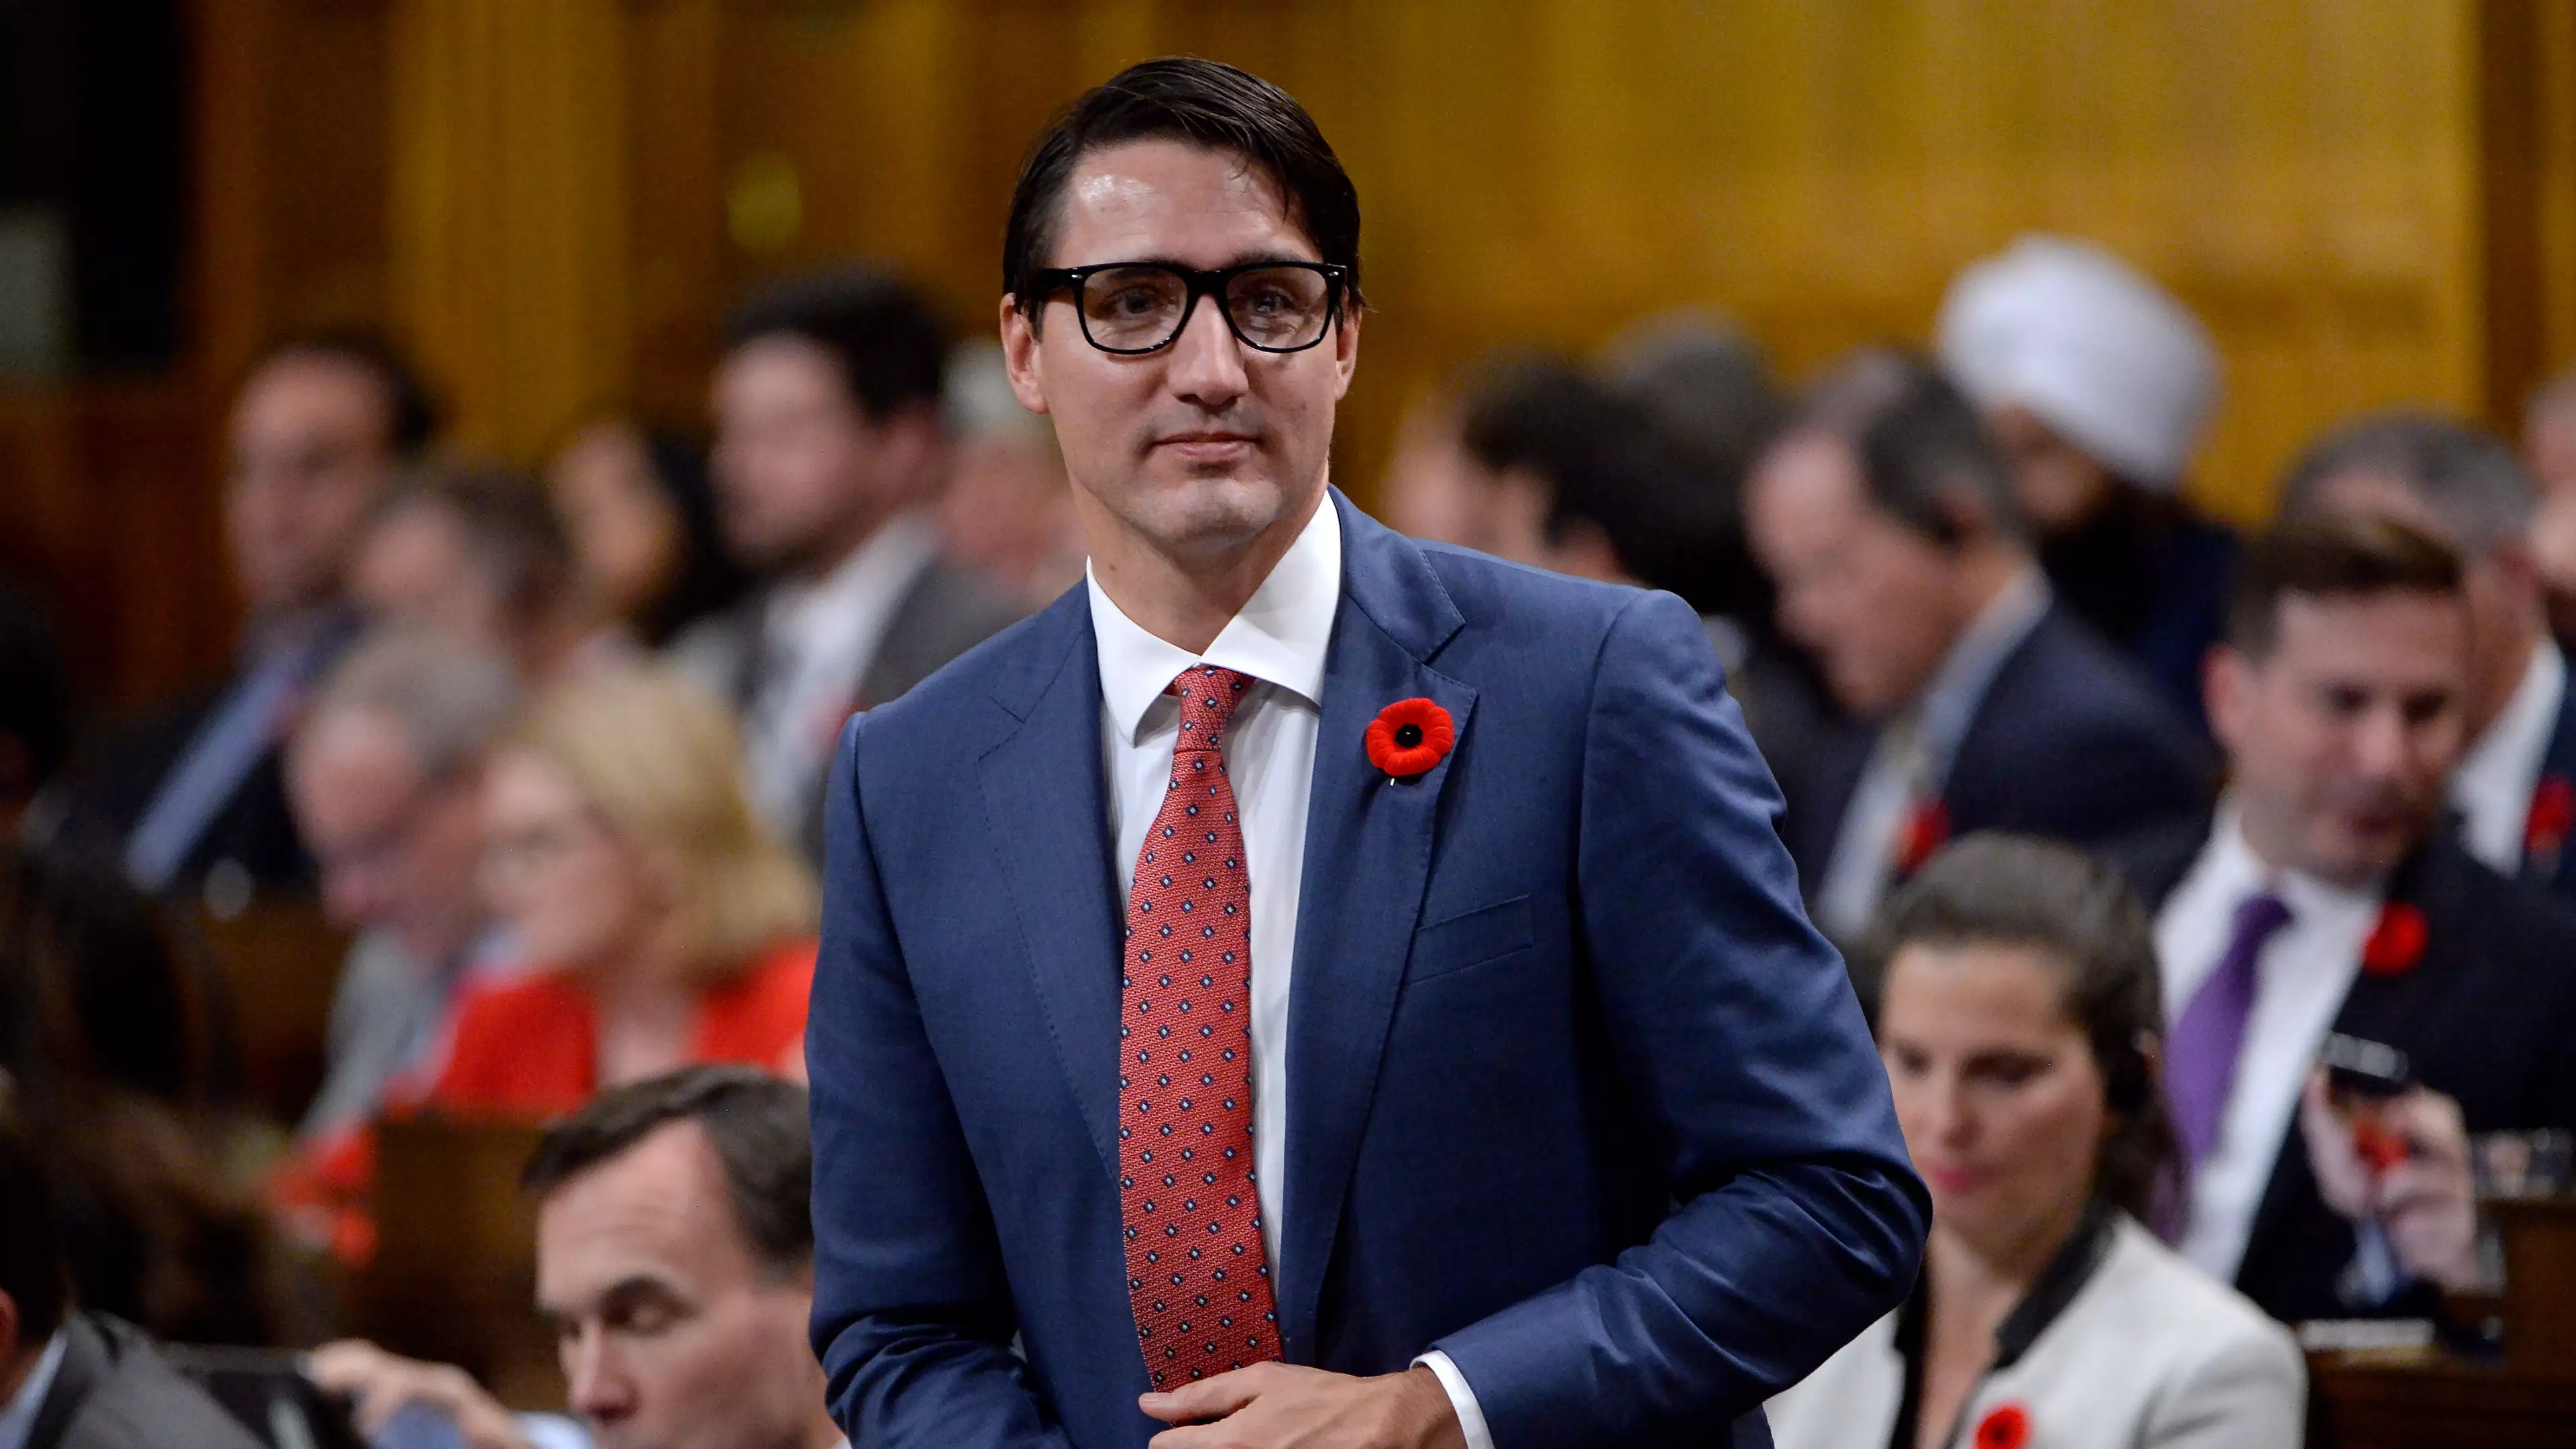 Canadian Prime Minister Justin Trudeau's Clark Kent/Superman Costume Was Brilliant 